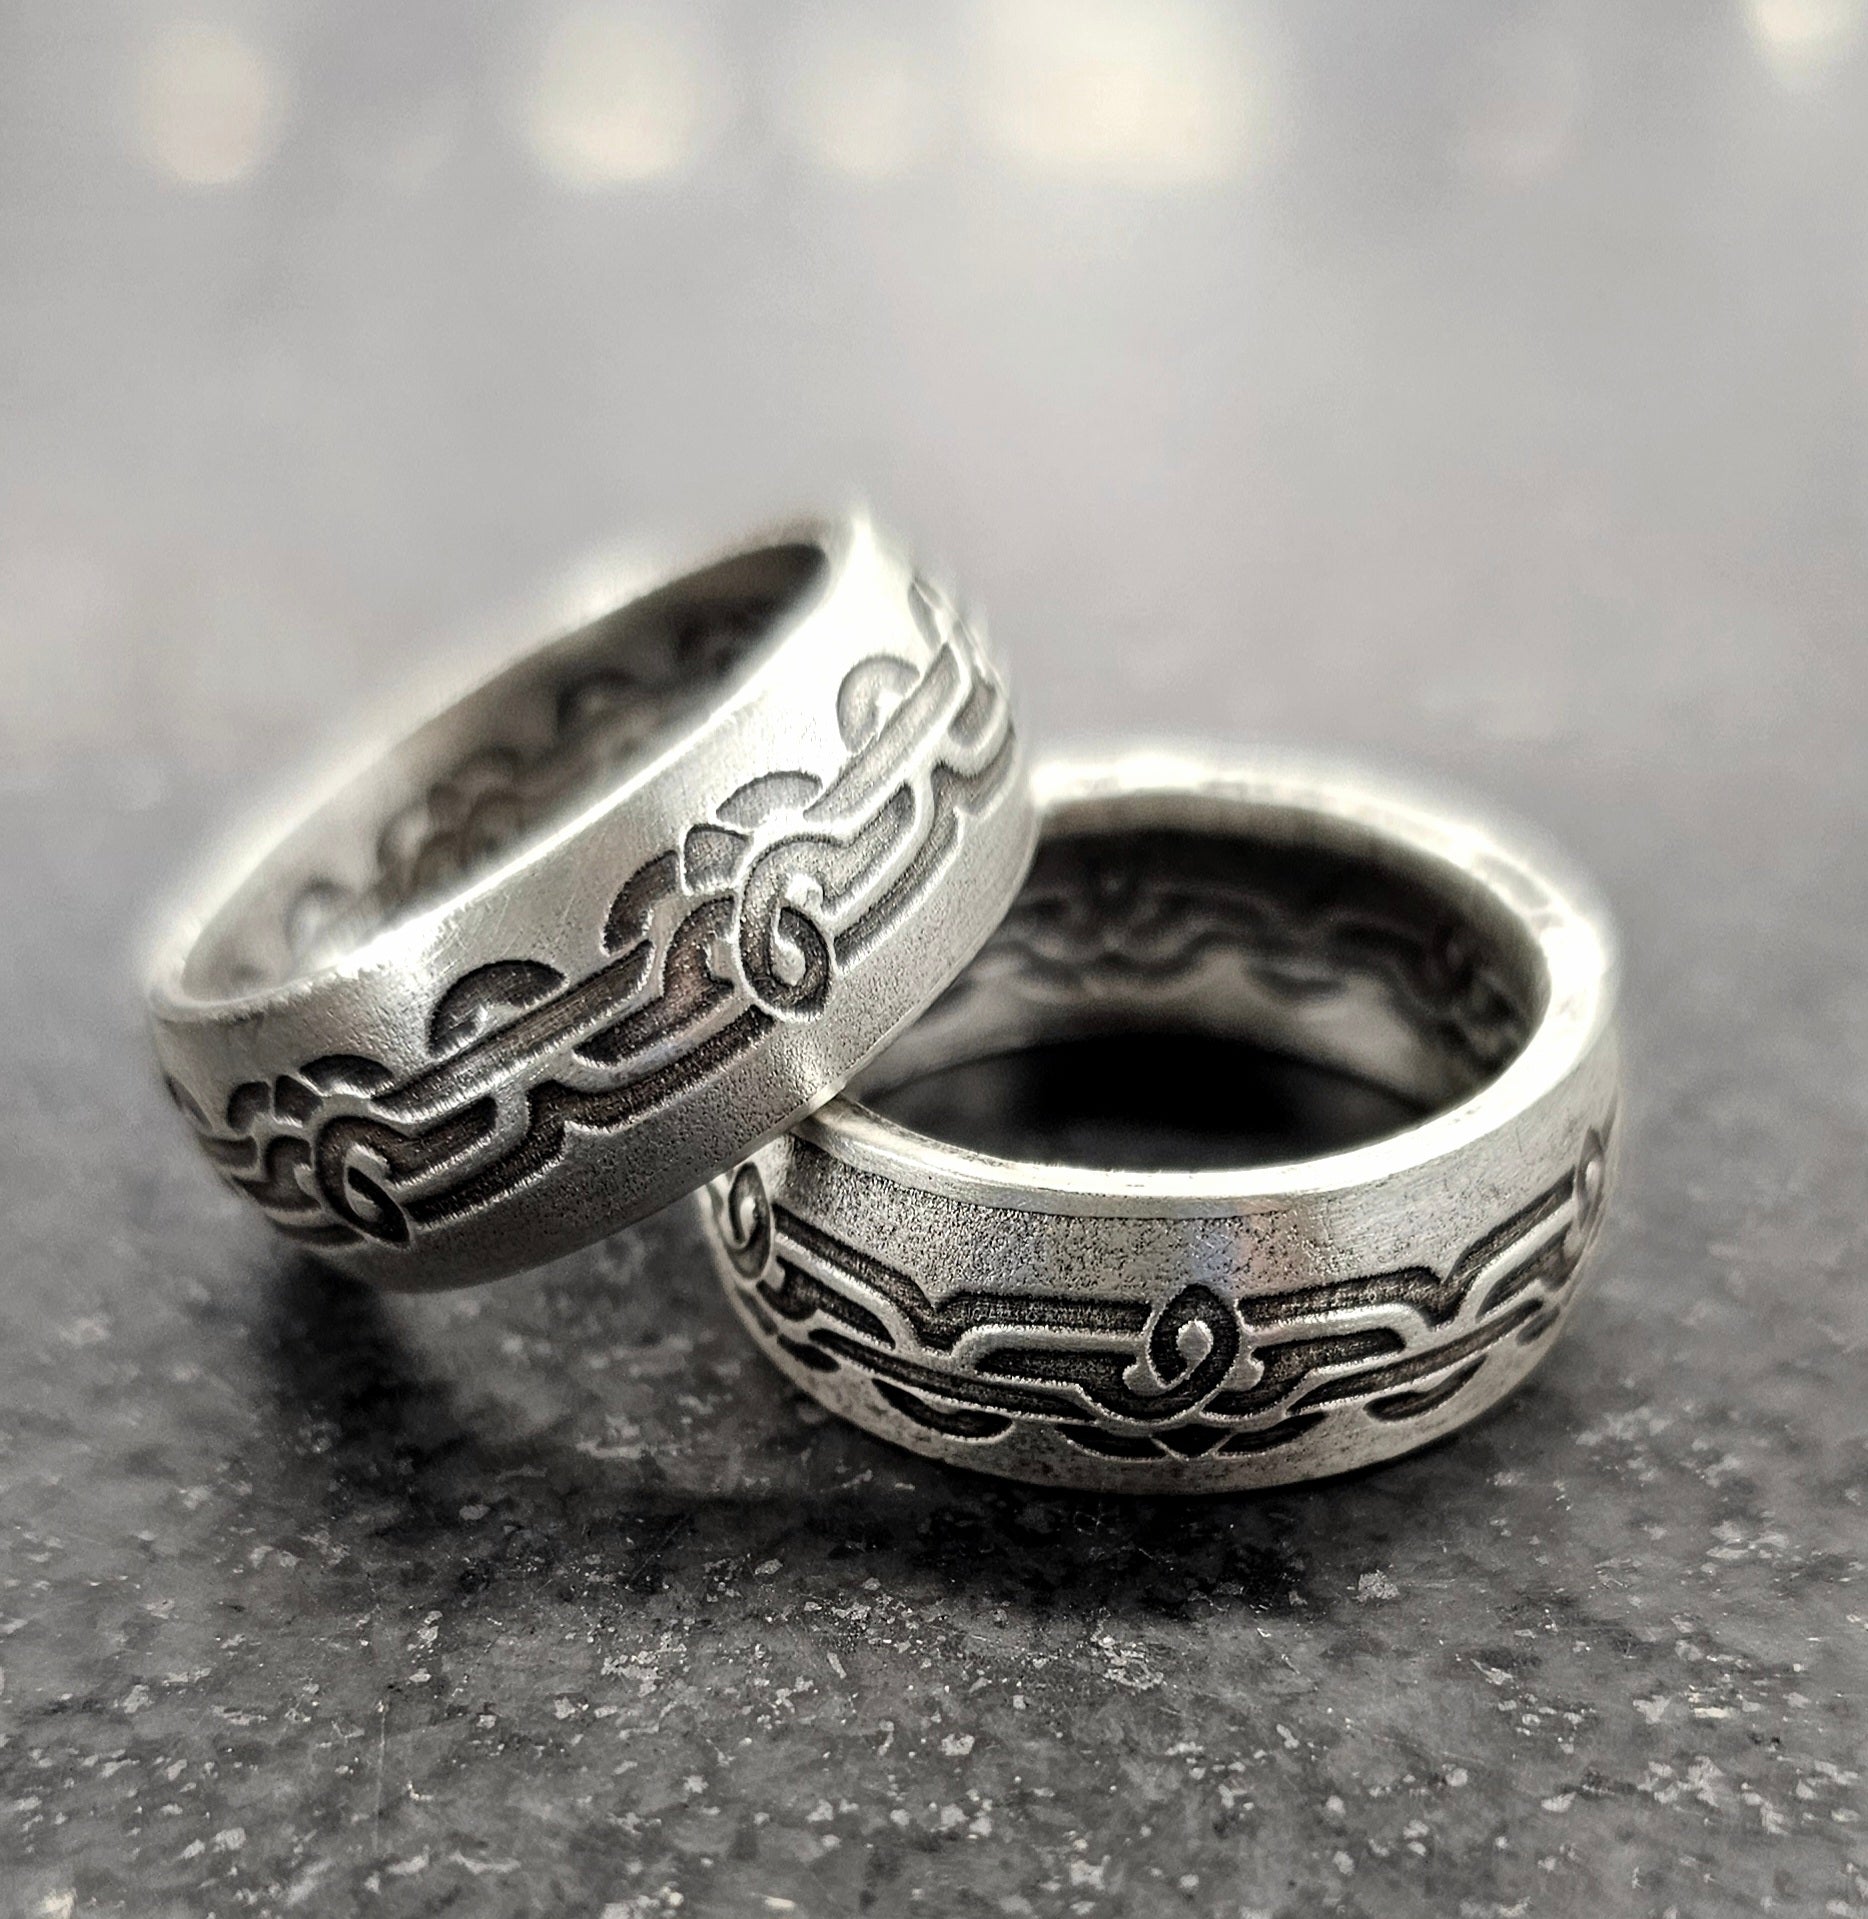 free sample turkish wedding 999 silver| Alibaba.com